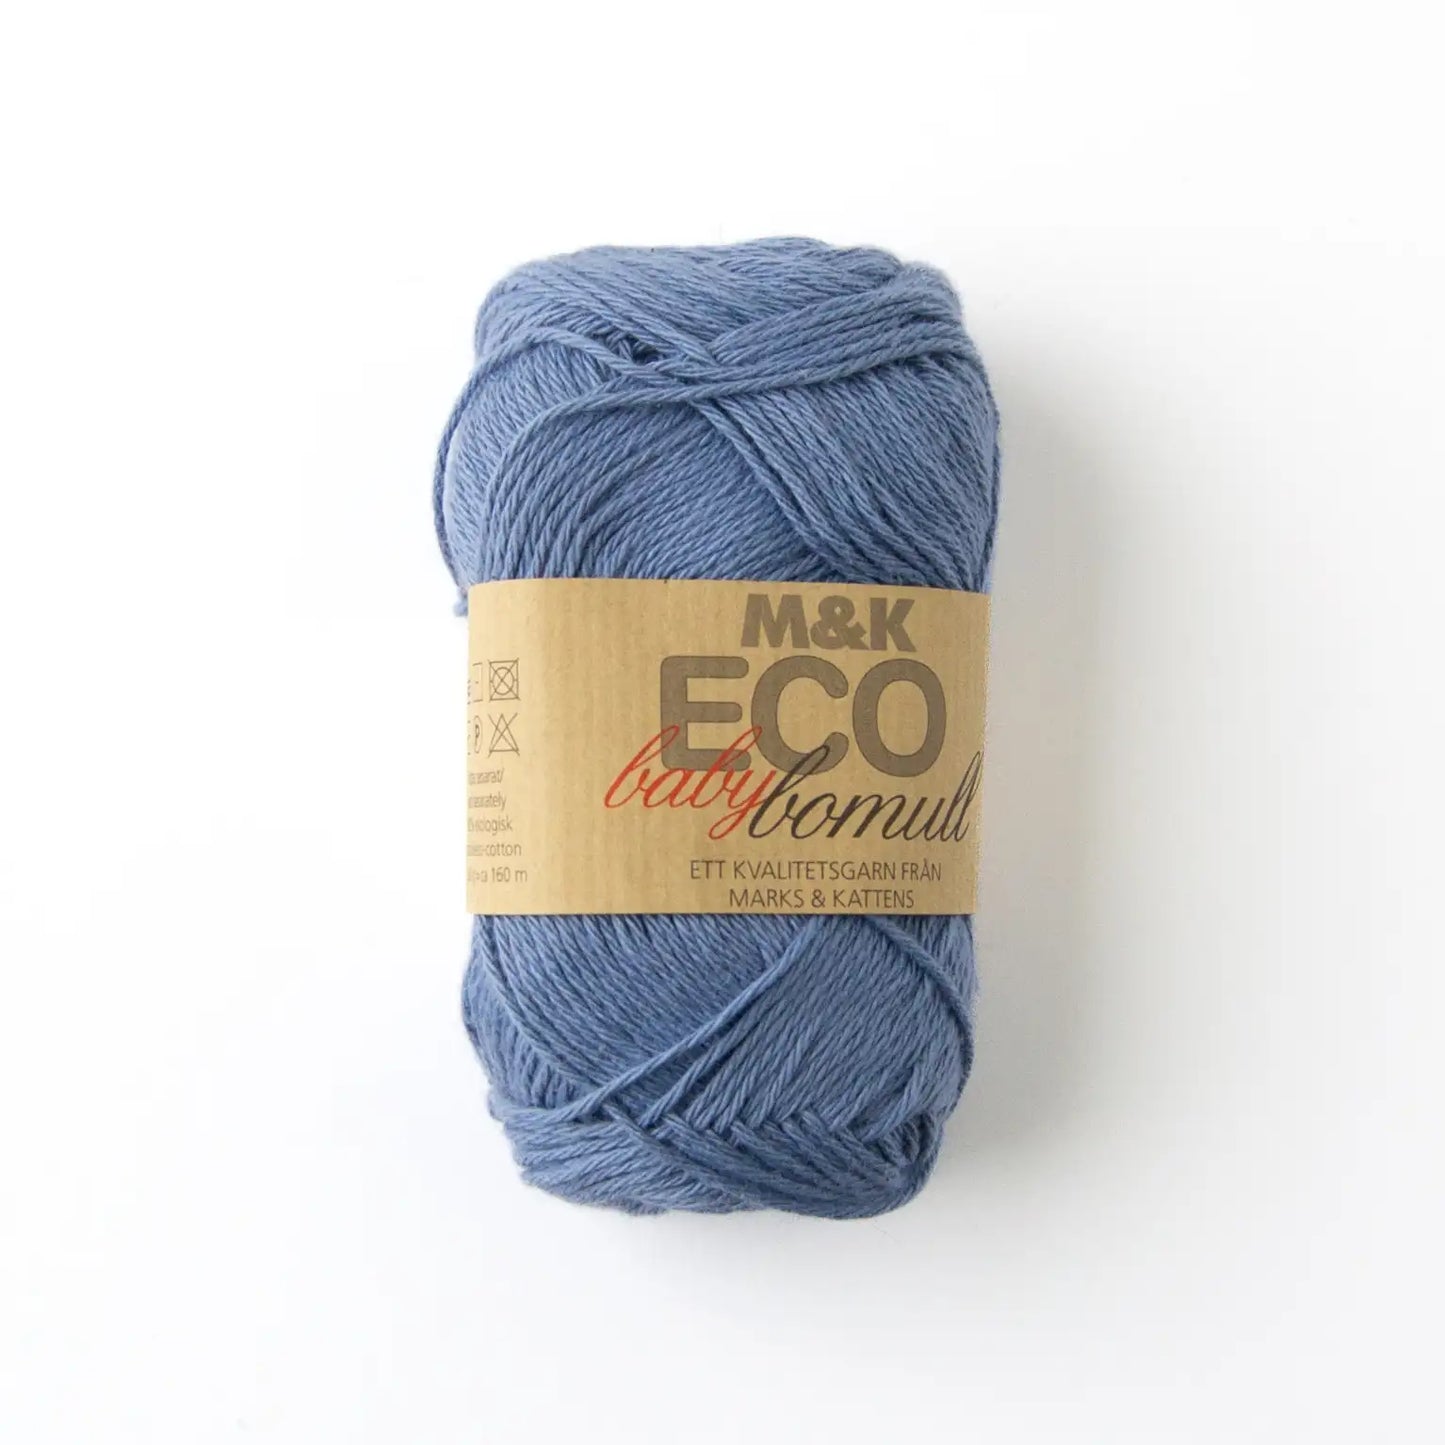 M&K Eco baby cotton | Organic cotton yarn